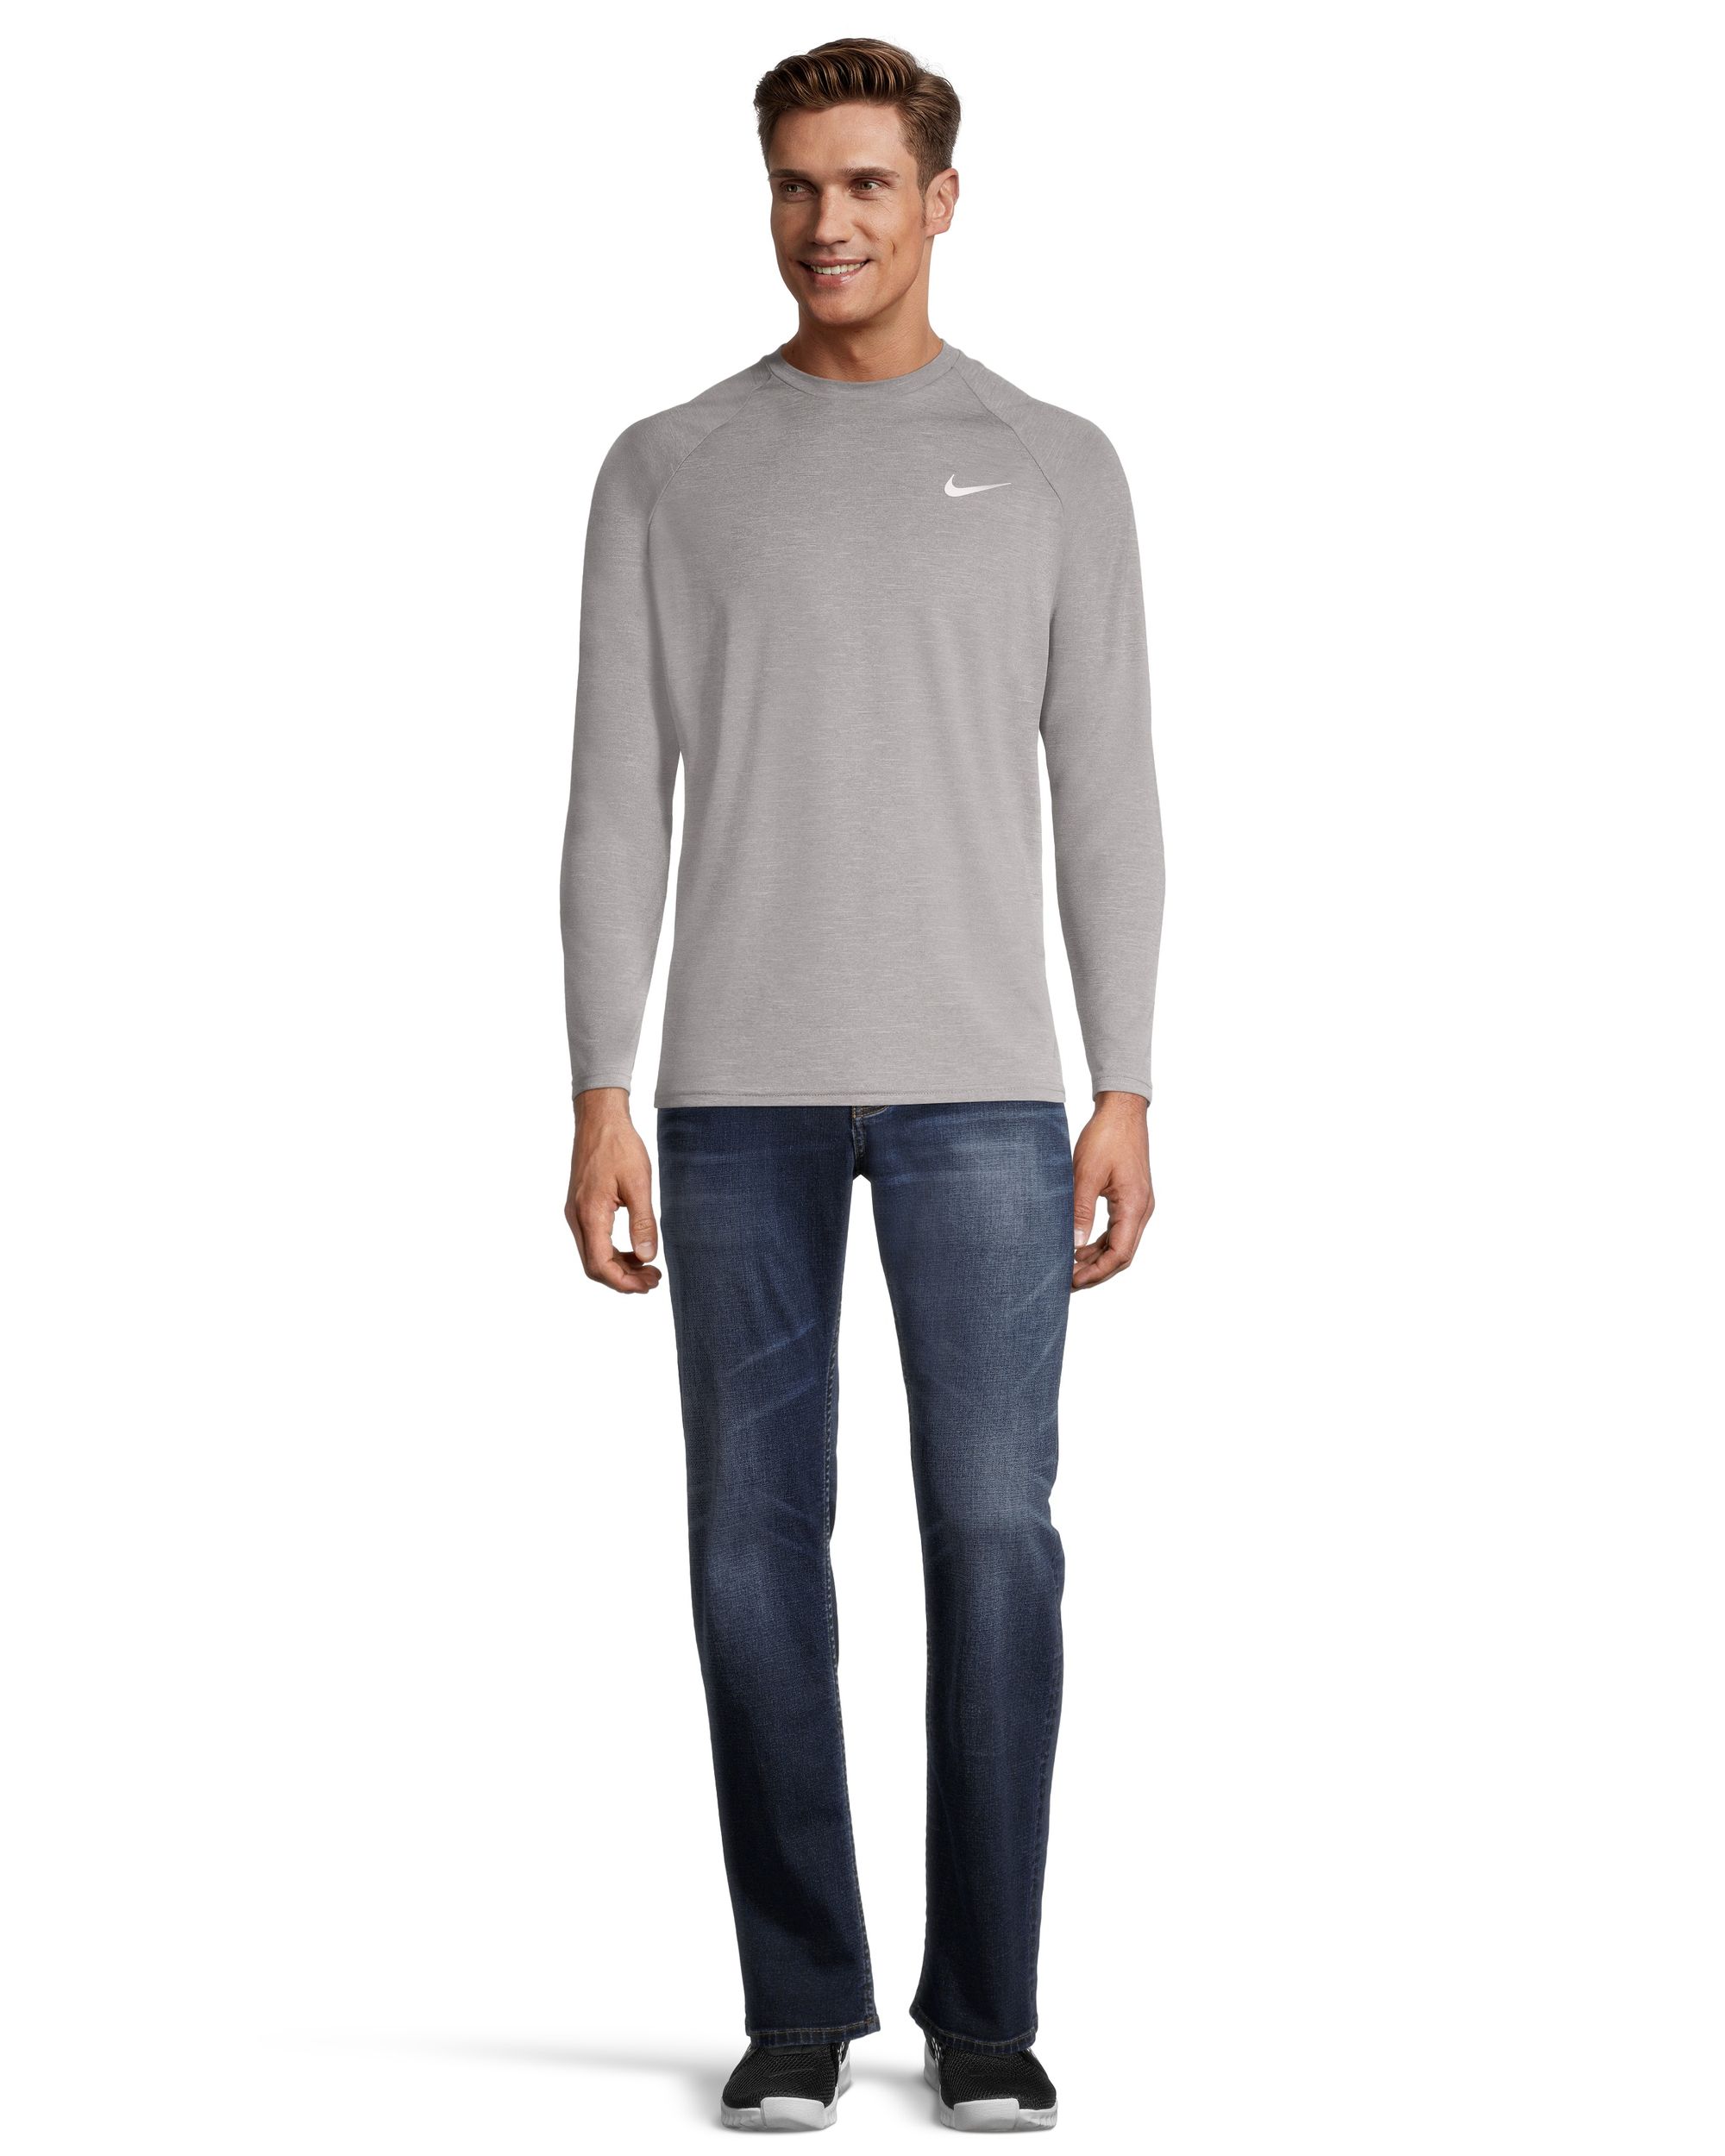 Nike Men's Heather Hydroguard Long Sleeve T Shirt